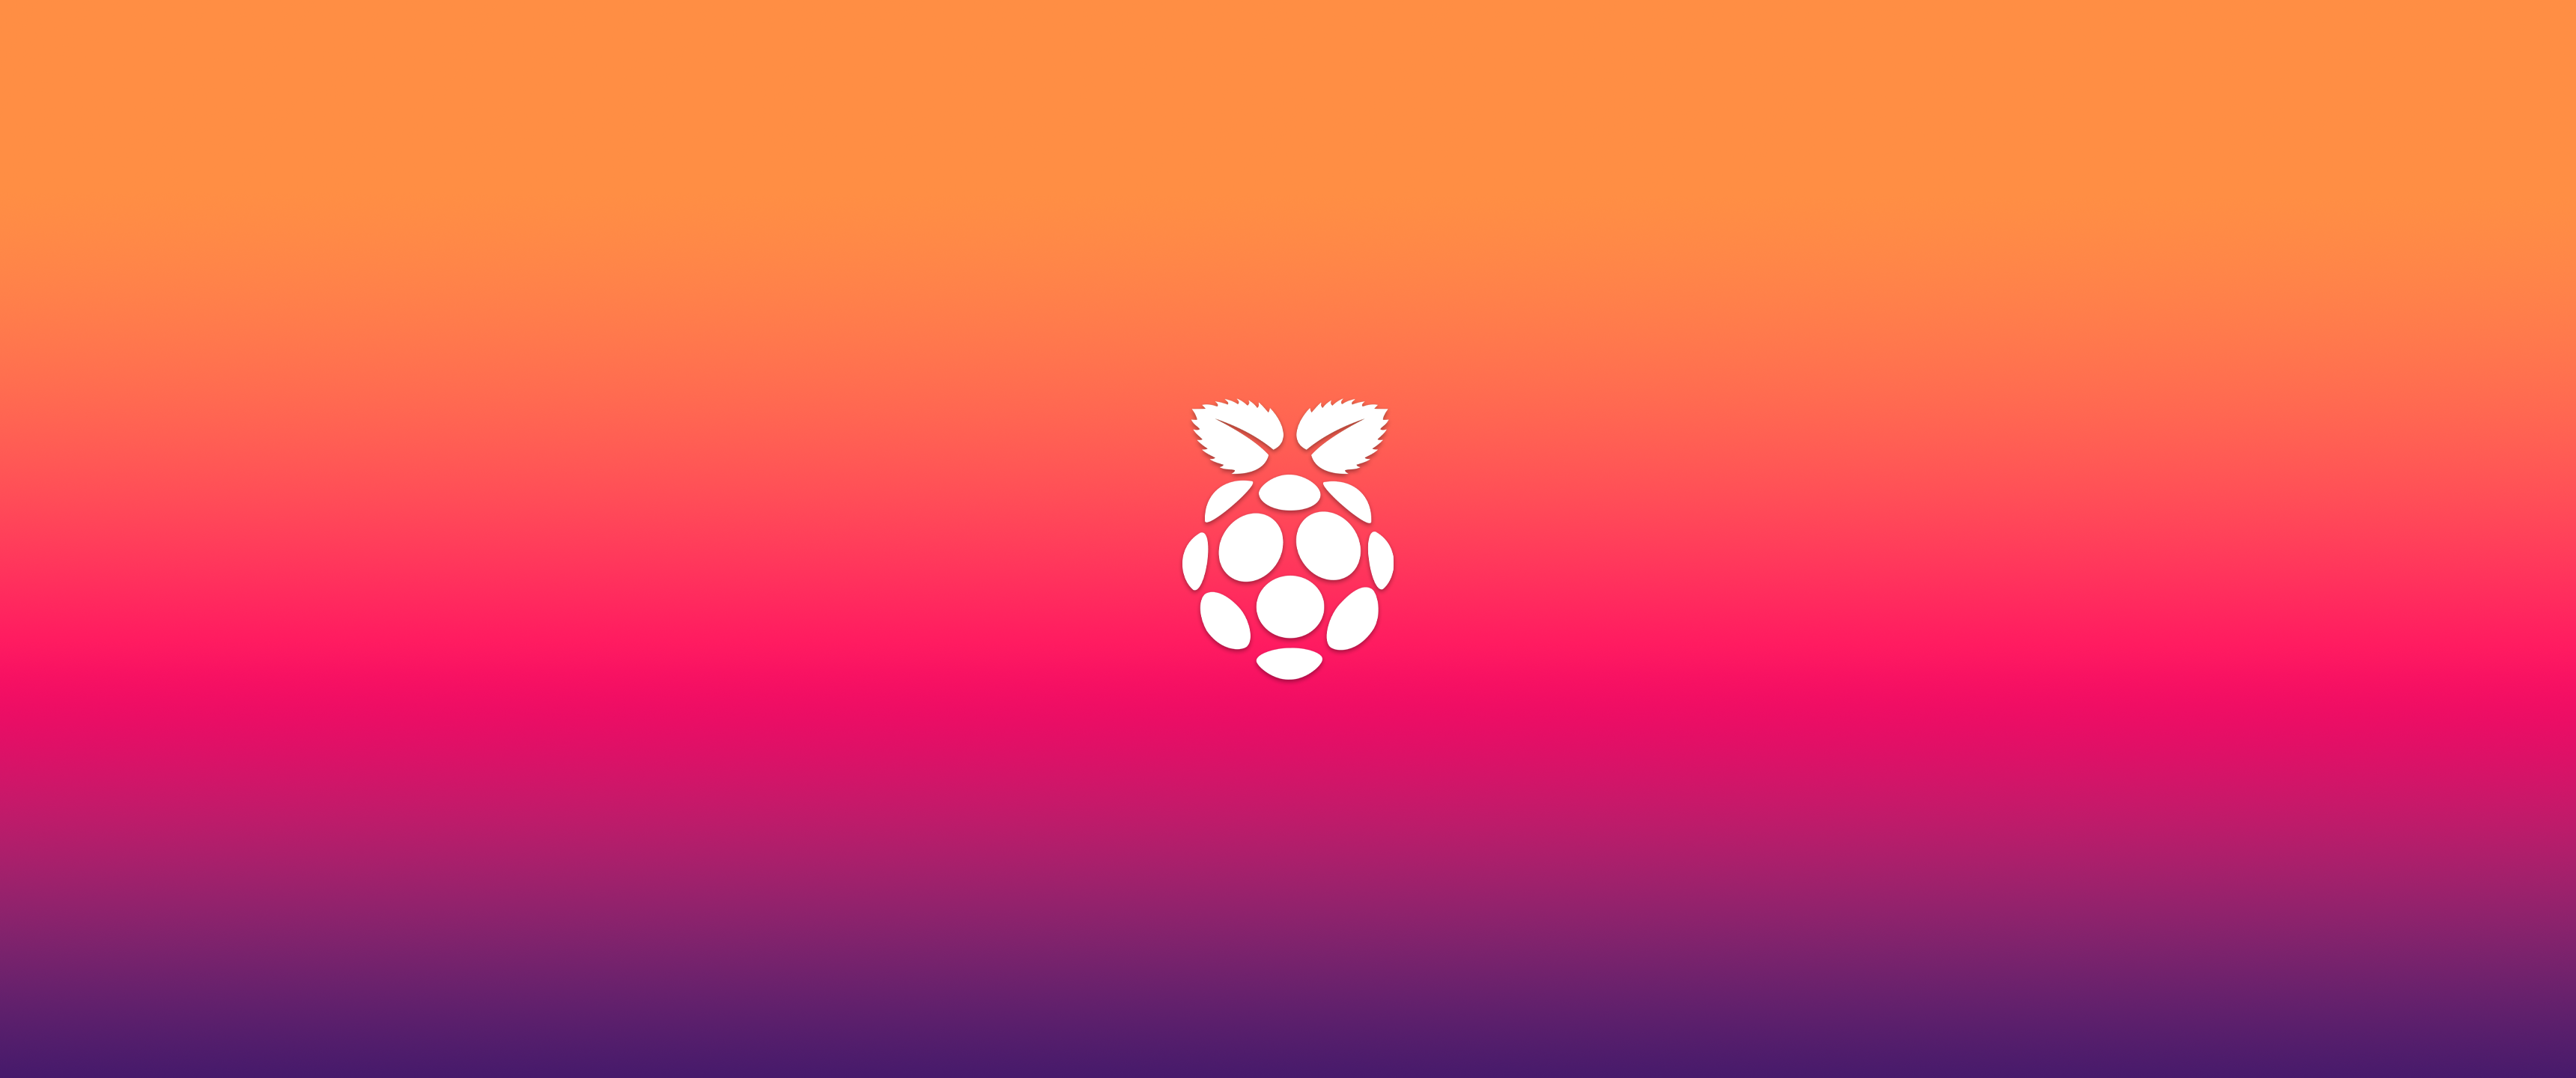 General 3440x1440 Raspberry Pi Linux gradient logo brand digital art simple background